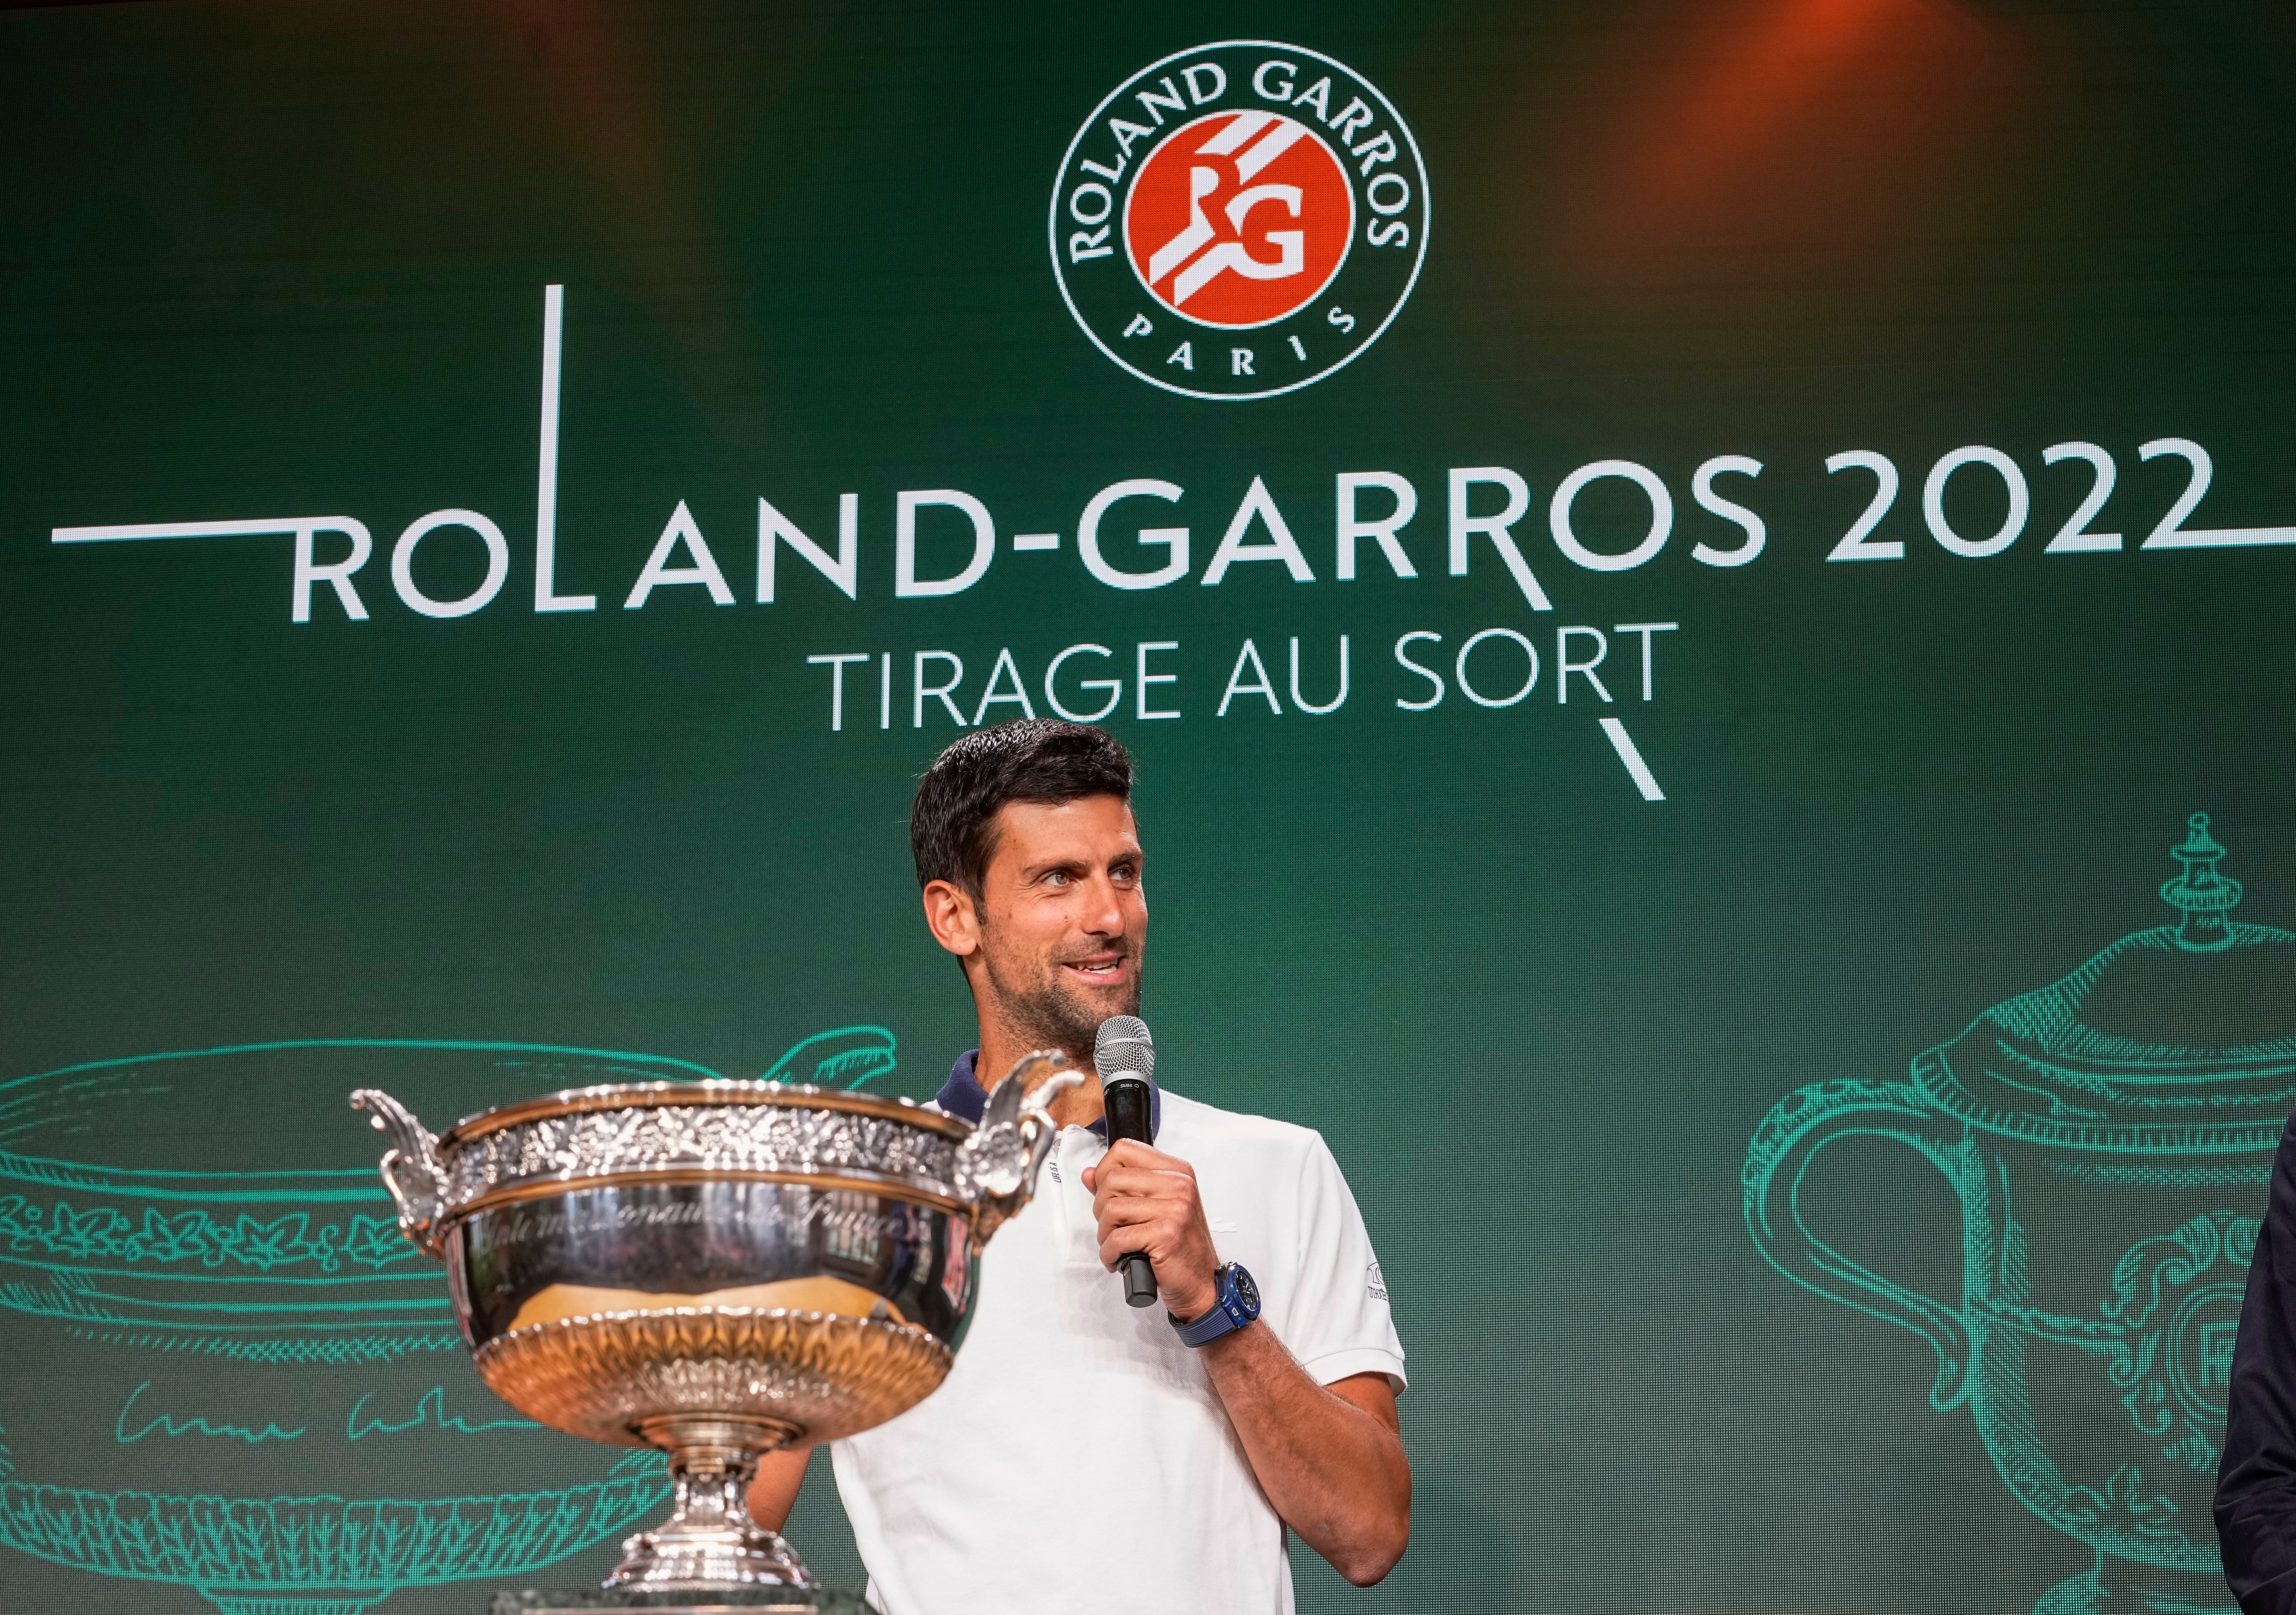 ATP Draw confirmed for 2023 French Open Roland Garros featuring Djokovic,  Alcaraz, Rune, Tsitsipas and Medvedev | Tennisuptodate.com